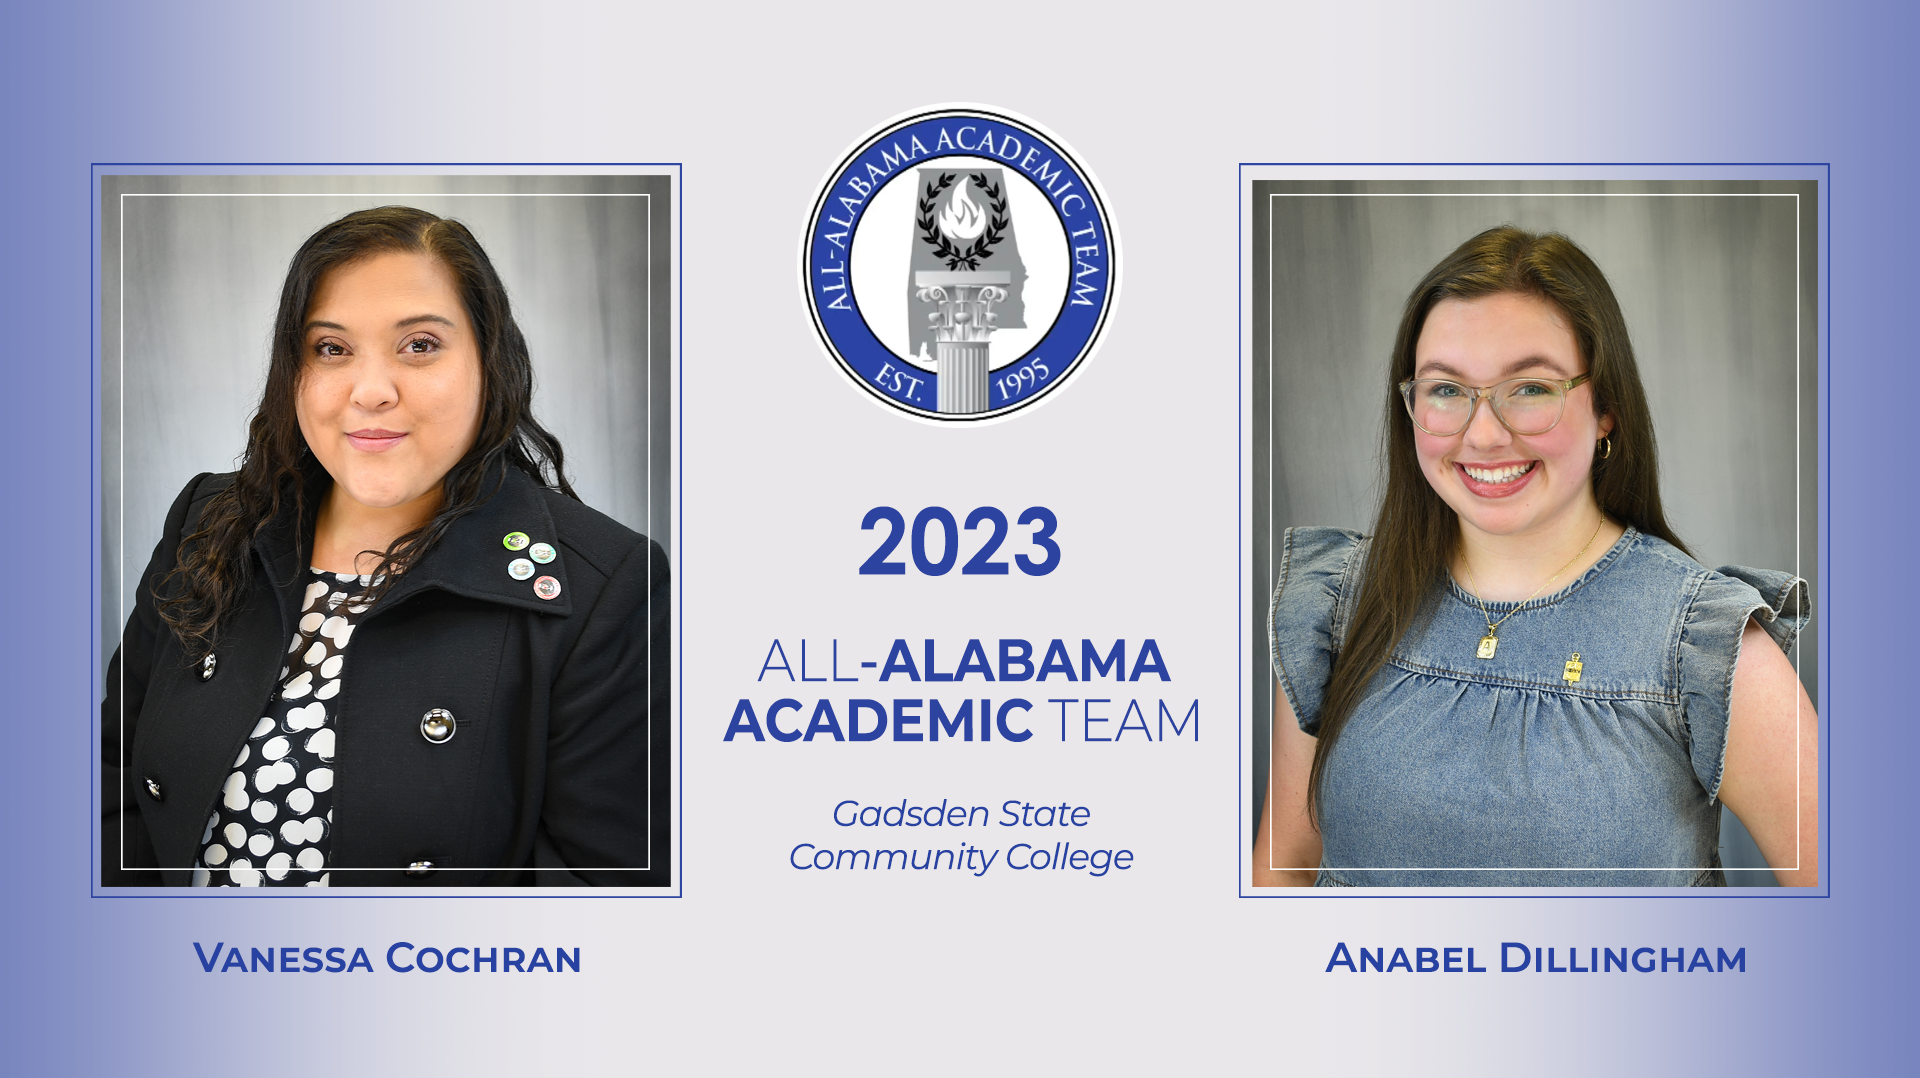 2023 All-Alabama Academic Team members Vanessa Cochran and Anabel Dillingham